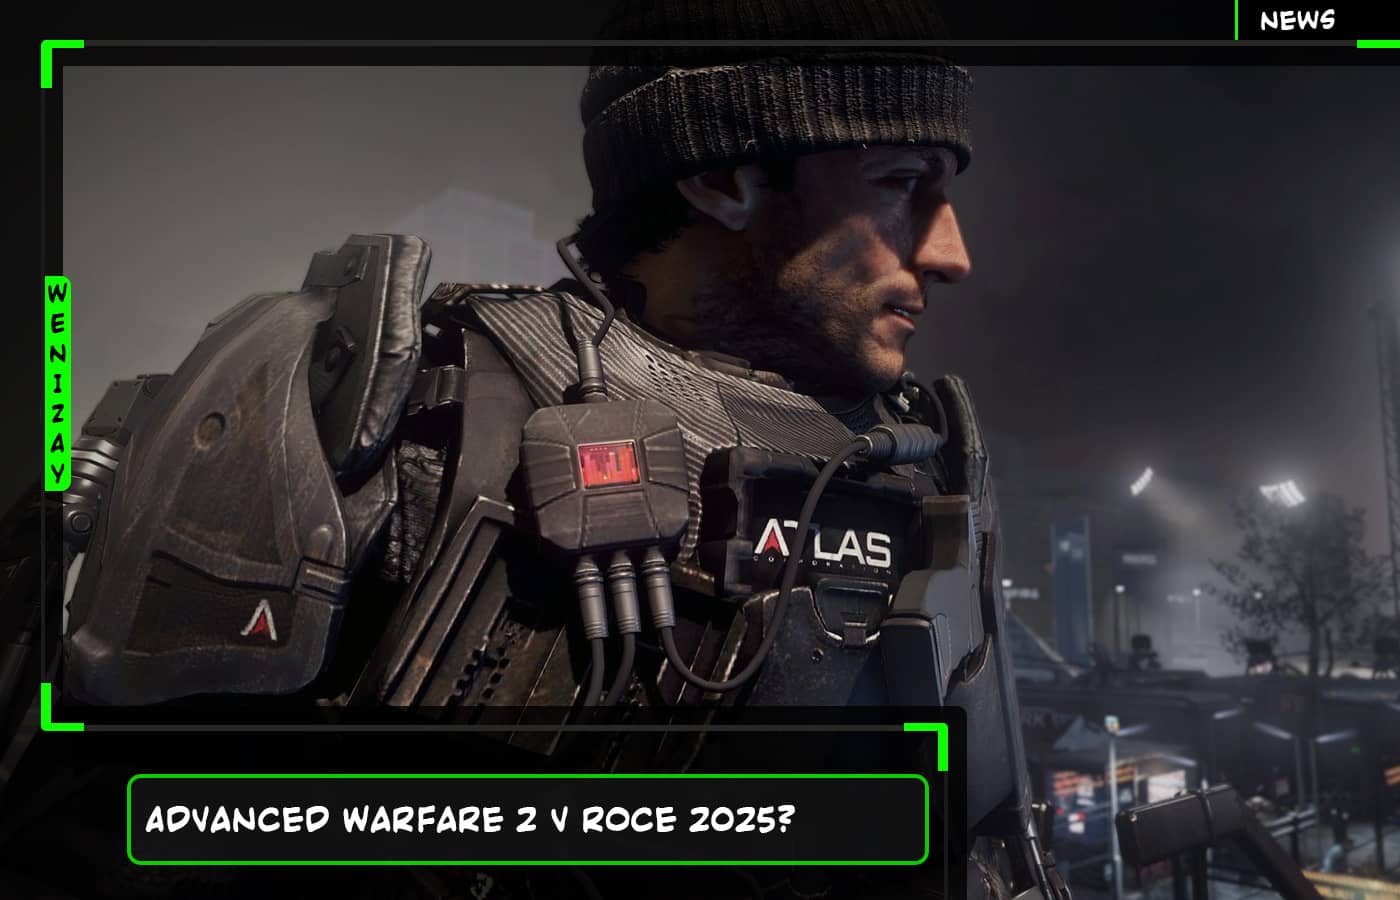 Novinky ve hře Call of Duty, Advanced Warfare 2